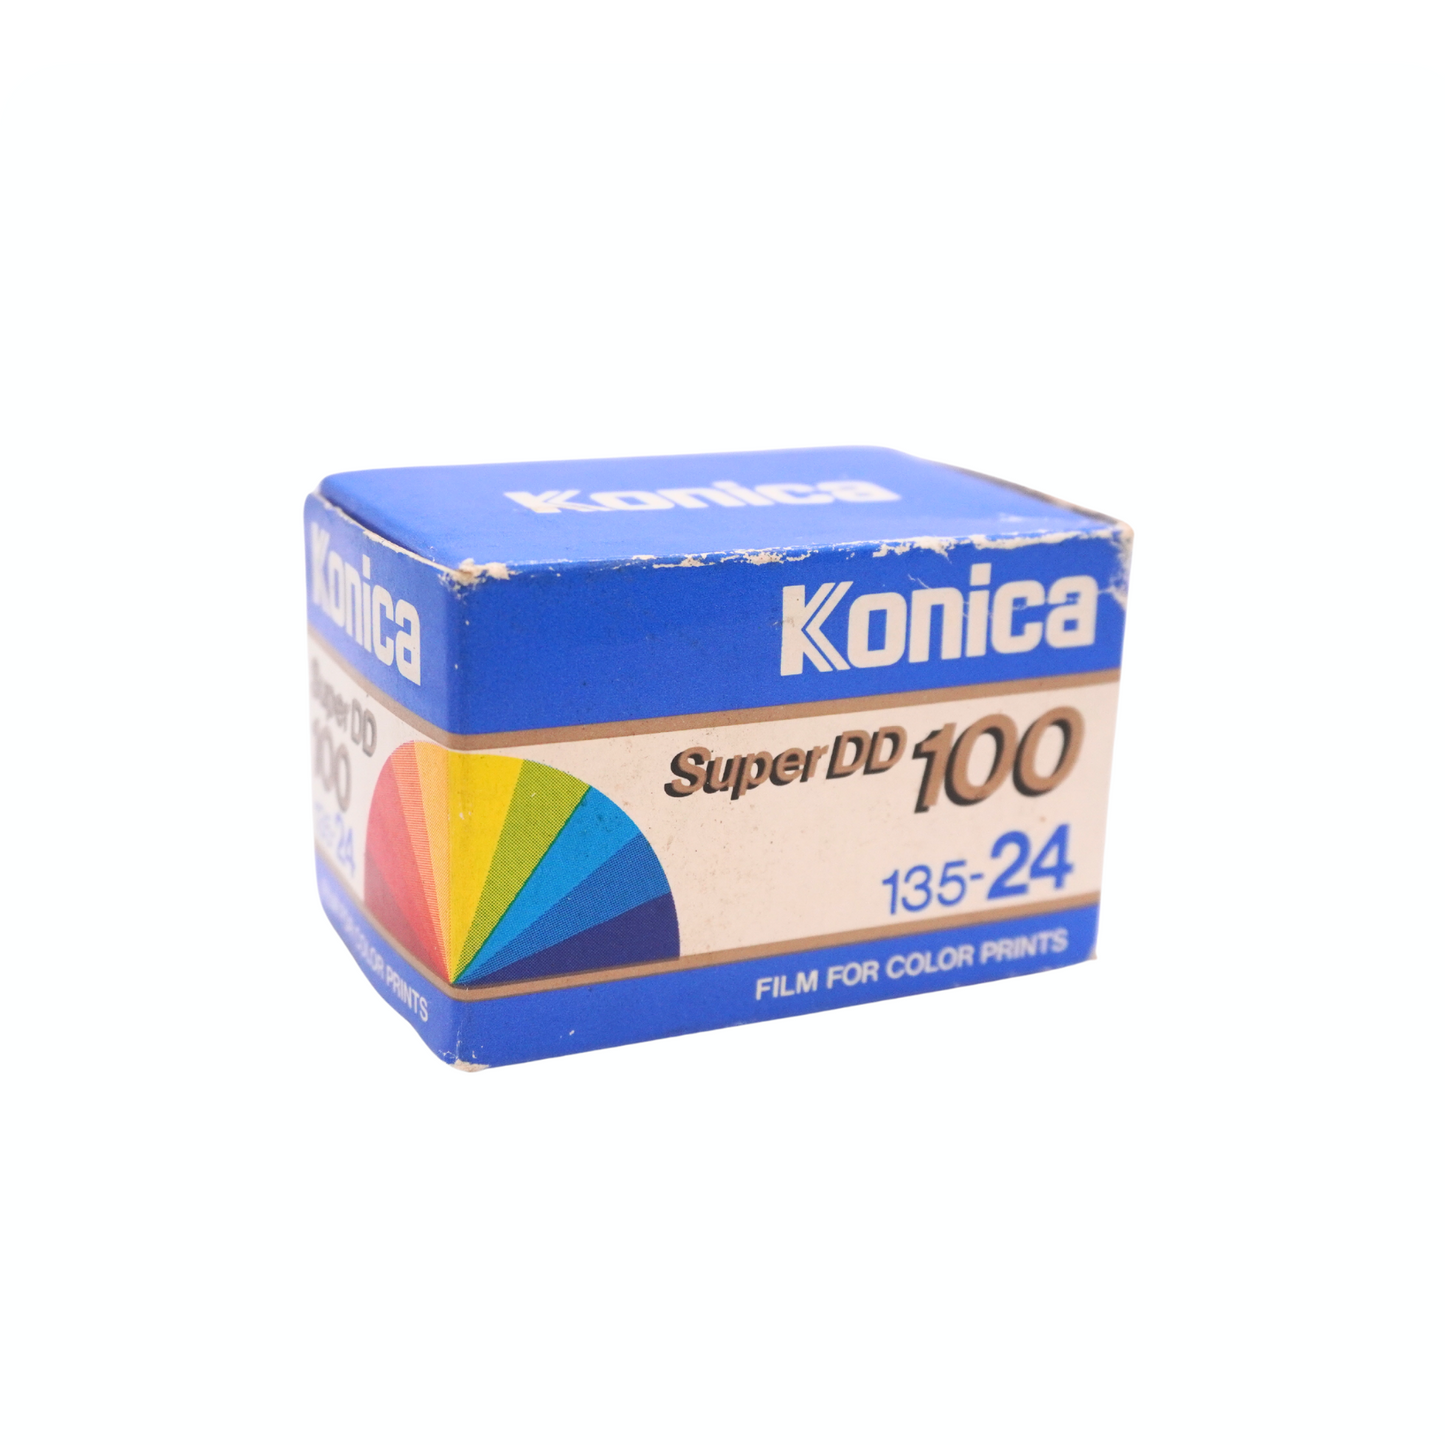 Konica Super DD 100 24exp Expired Film (1992/10)